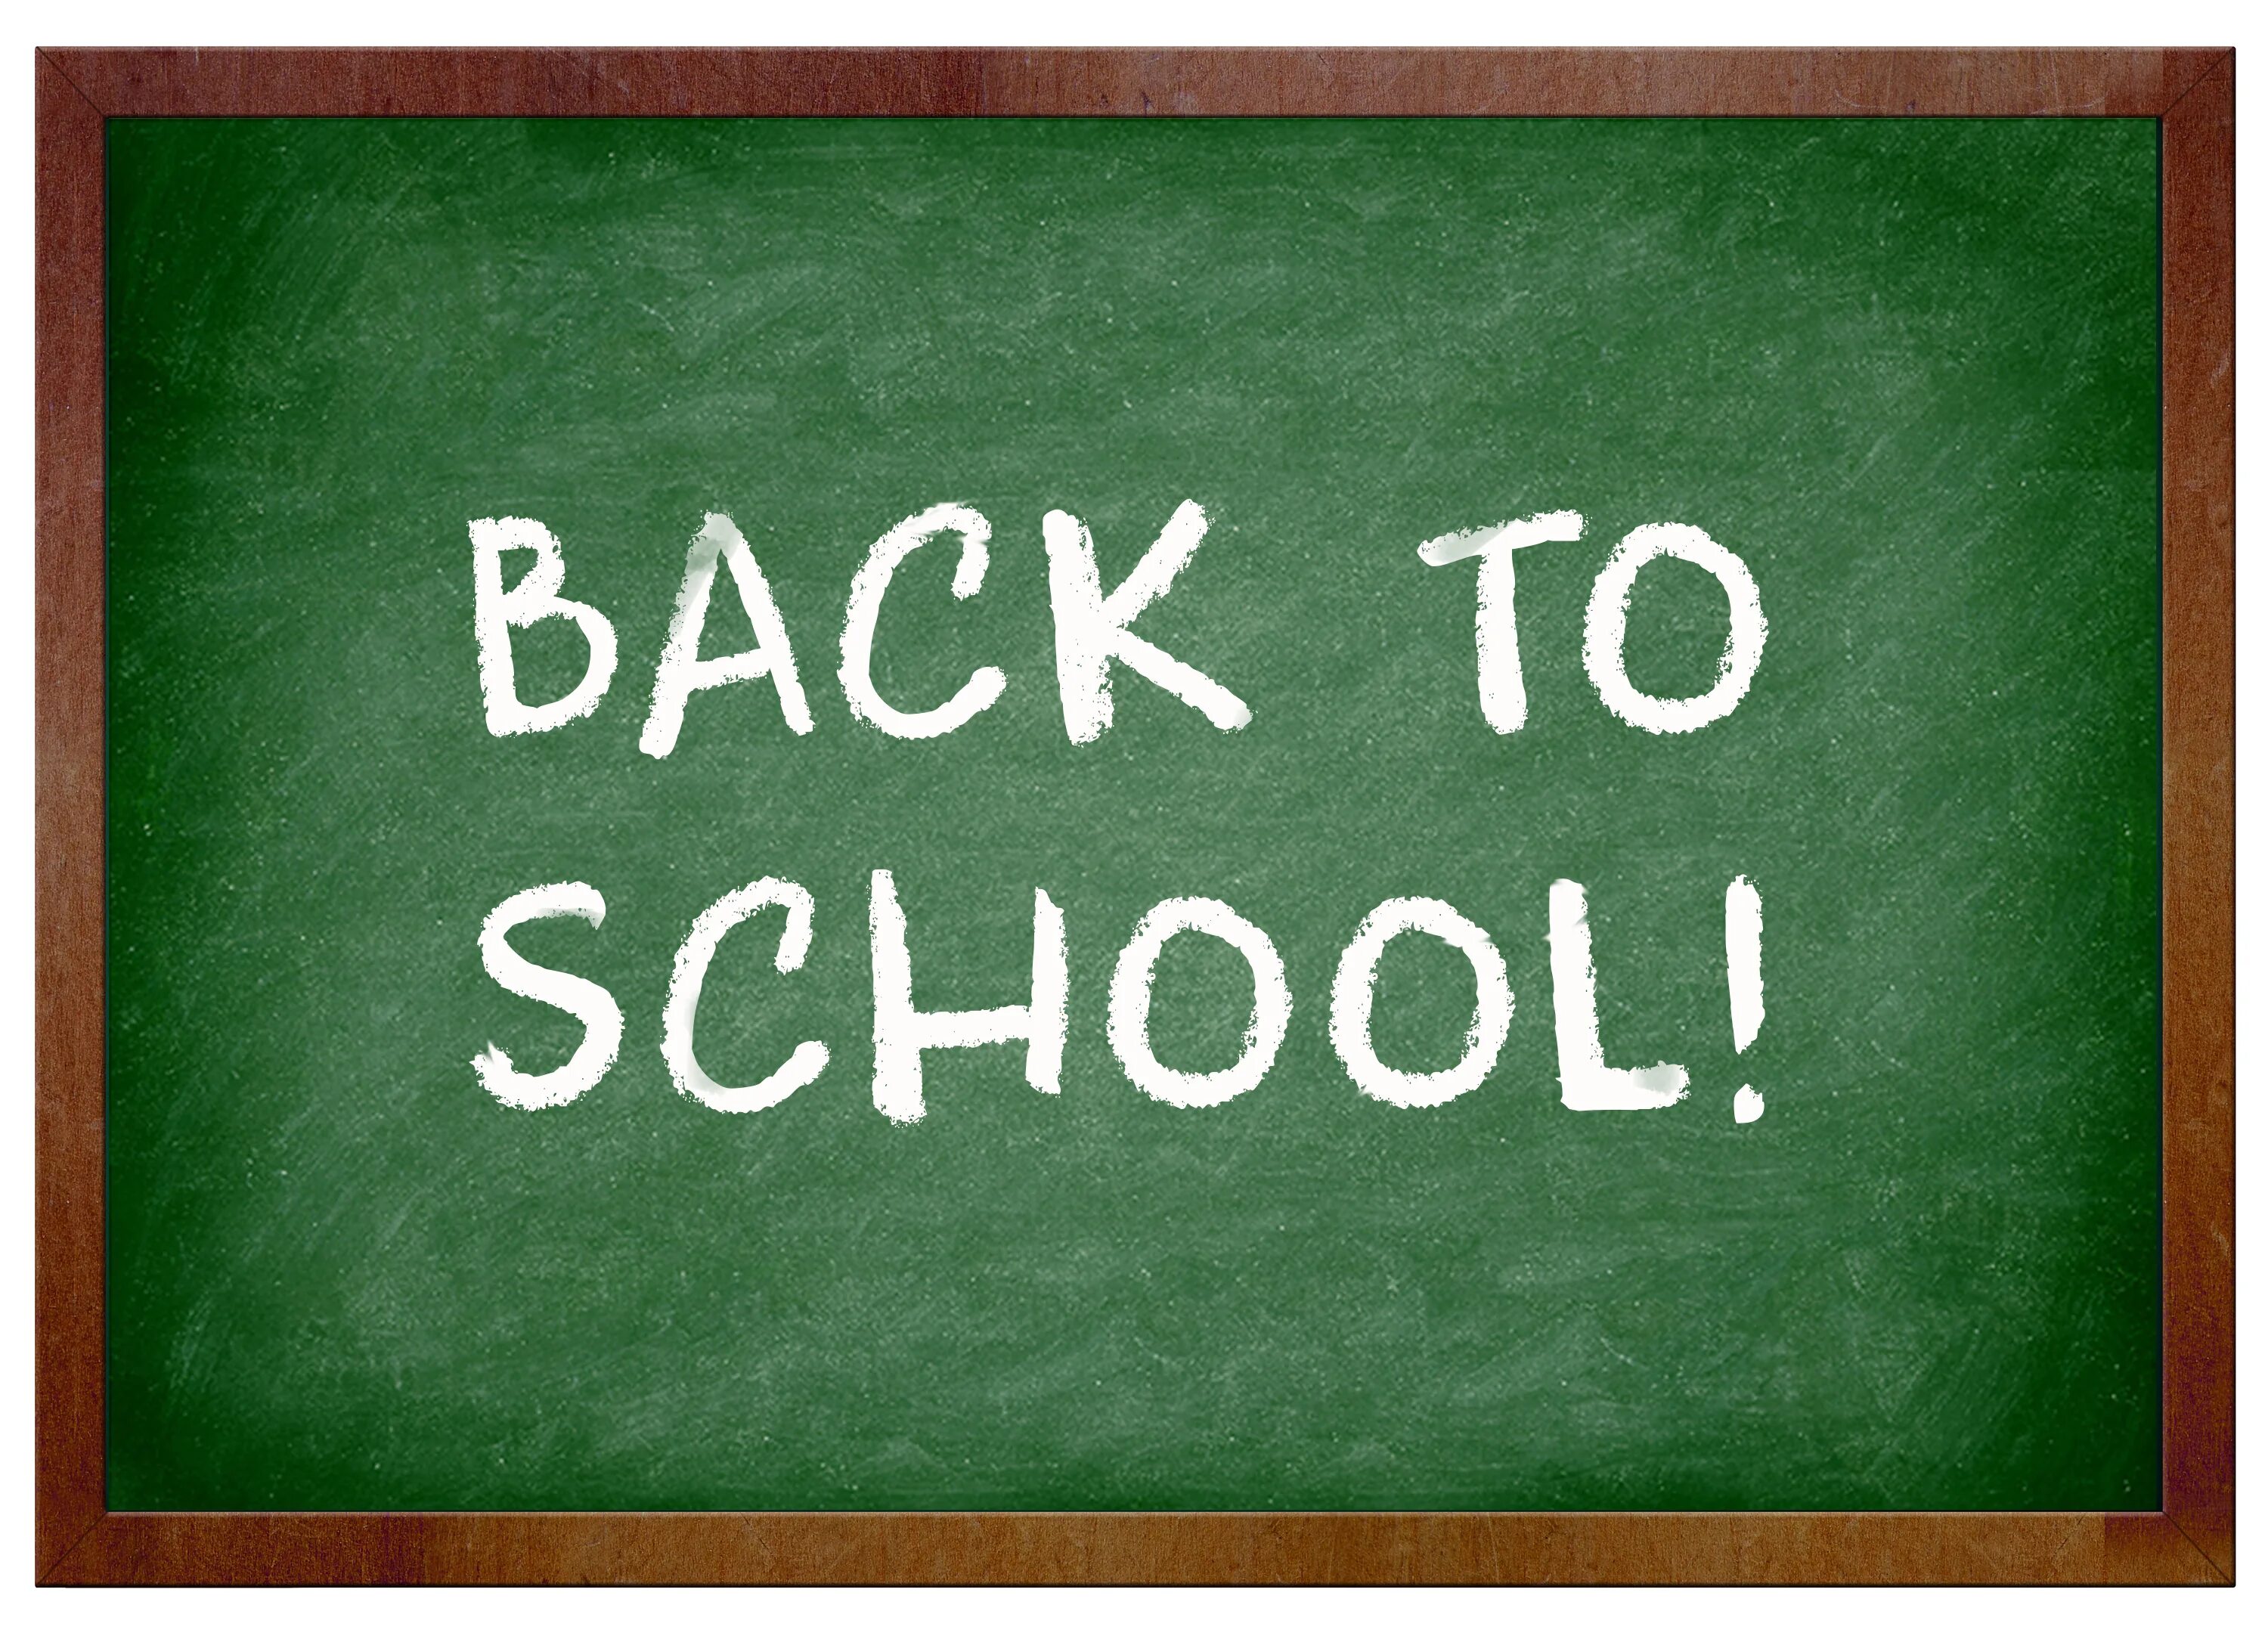 Back to School. Back to School картинки. Back to School Board. School Chalkboard. Back to school 1